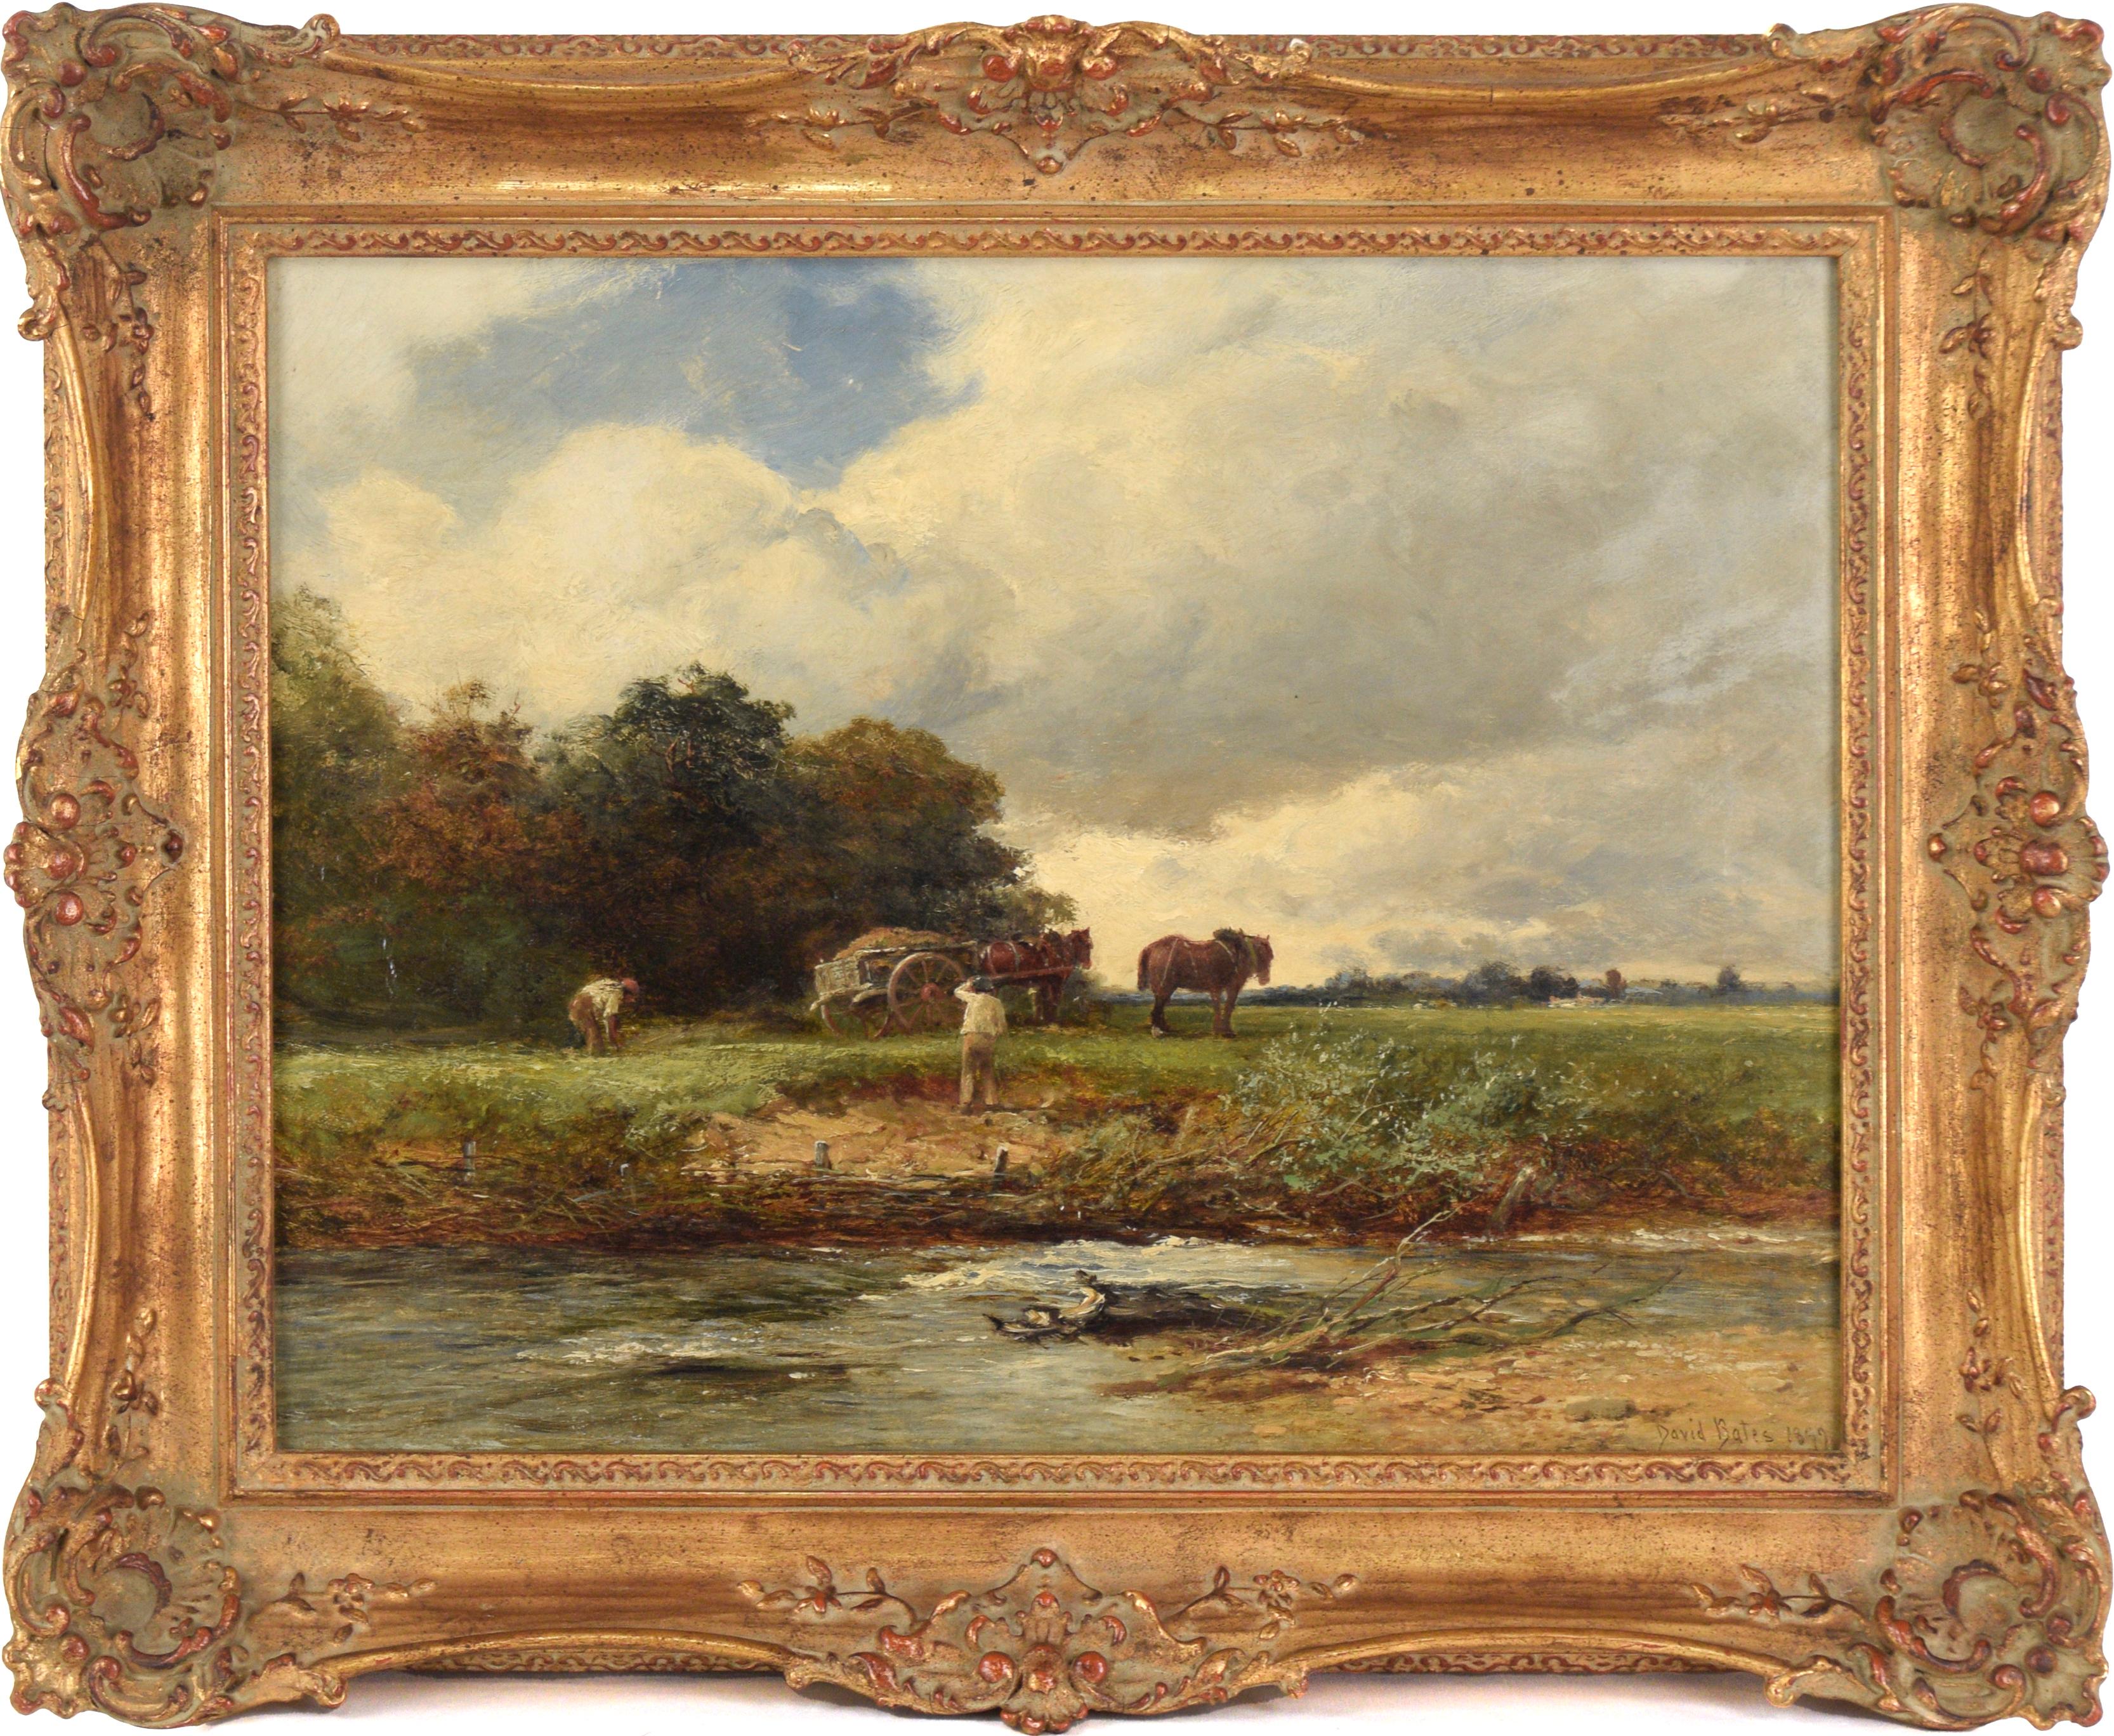 David Bates b.1840 Landscape Painting - "Mending the Bank" 1899 - English Pastoral Oil on Linen by David Bates 